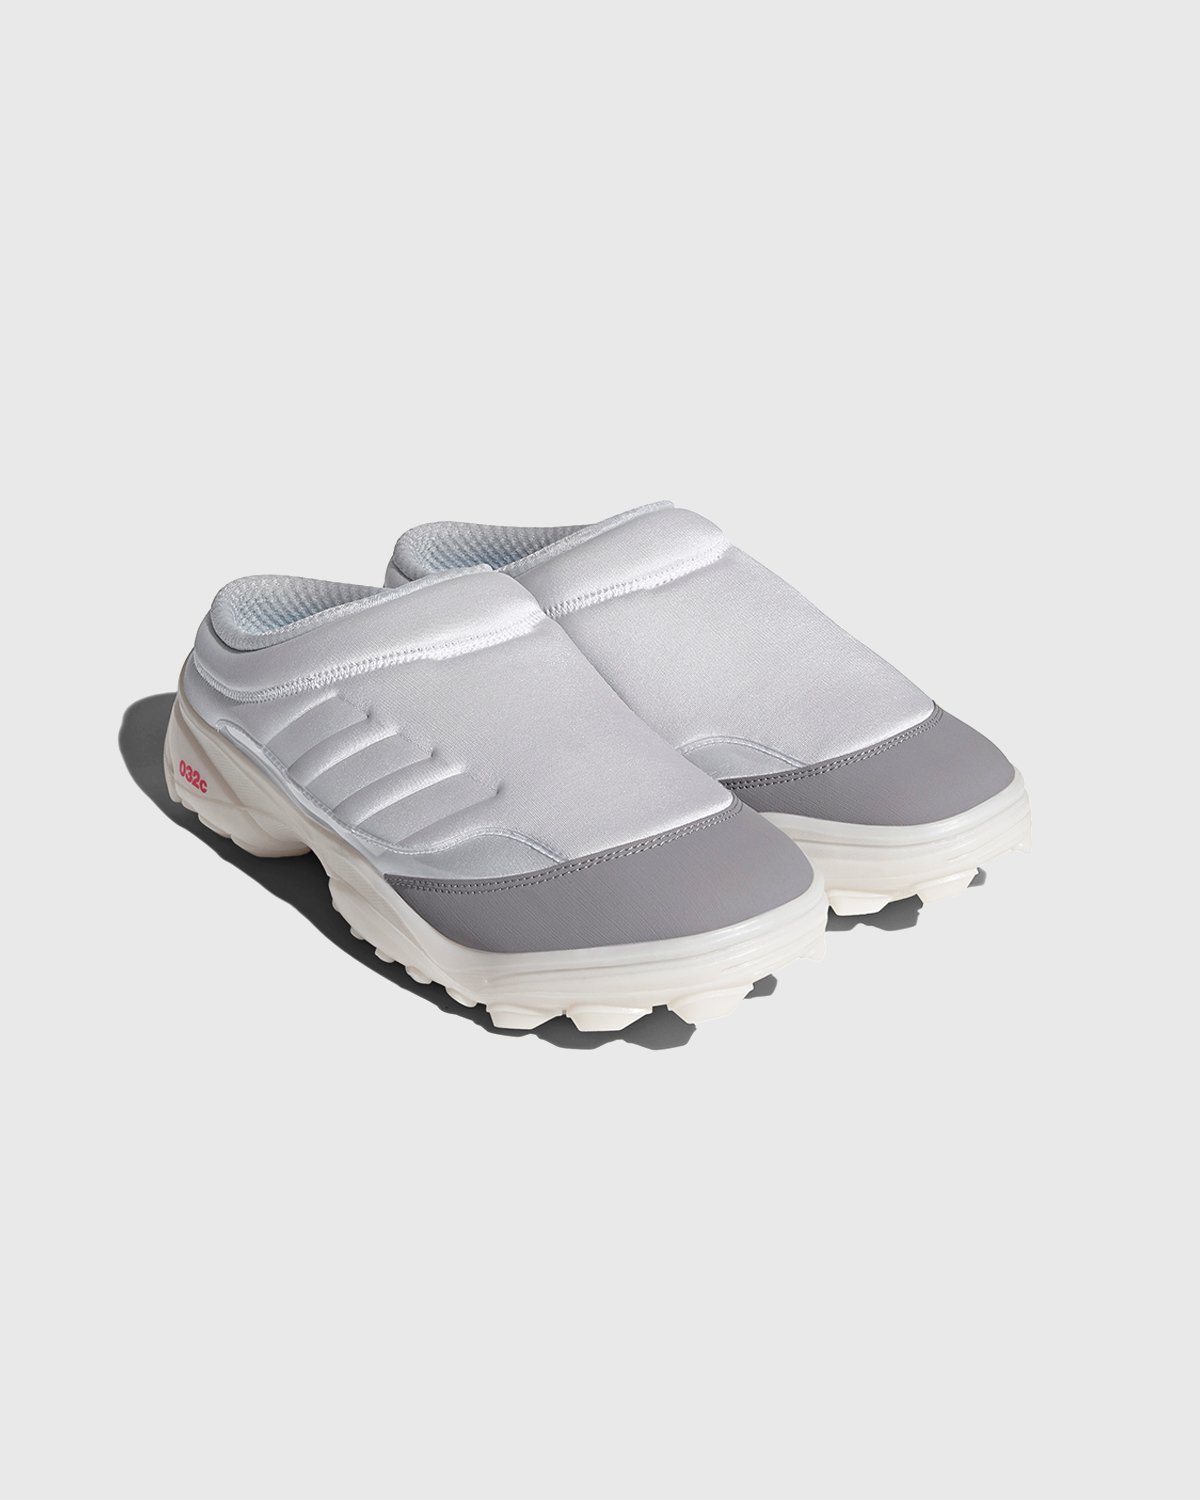 Adidas x 032c - GSG Mule Greone - Footwear - White - Image 3